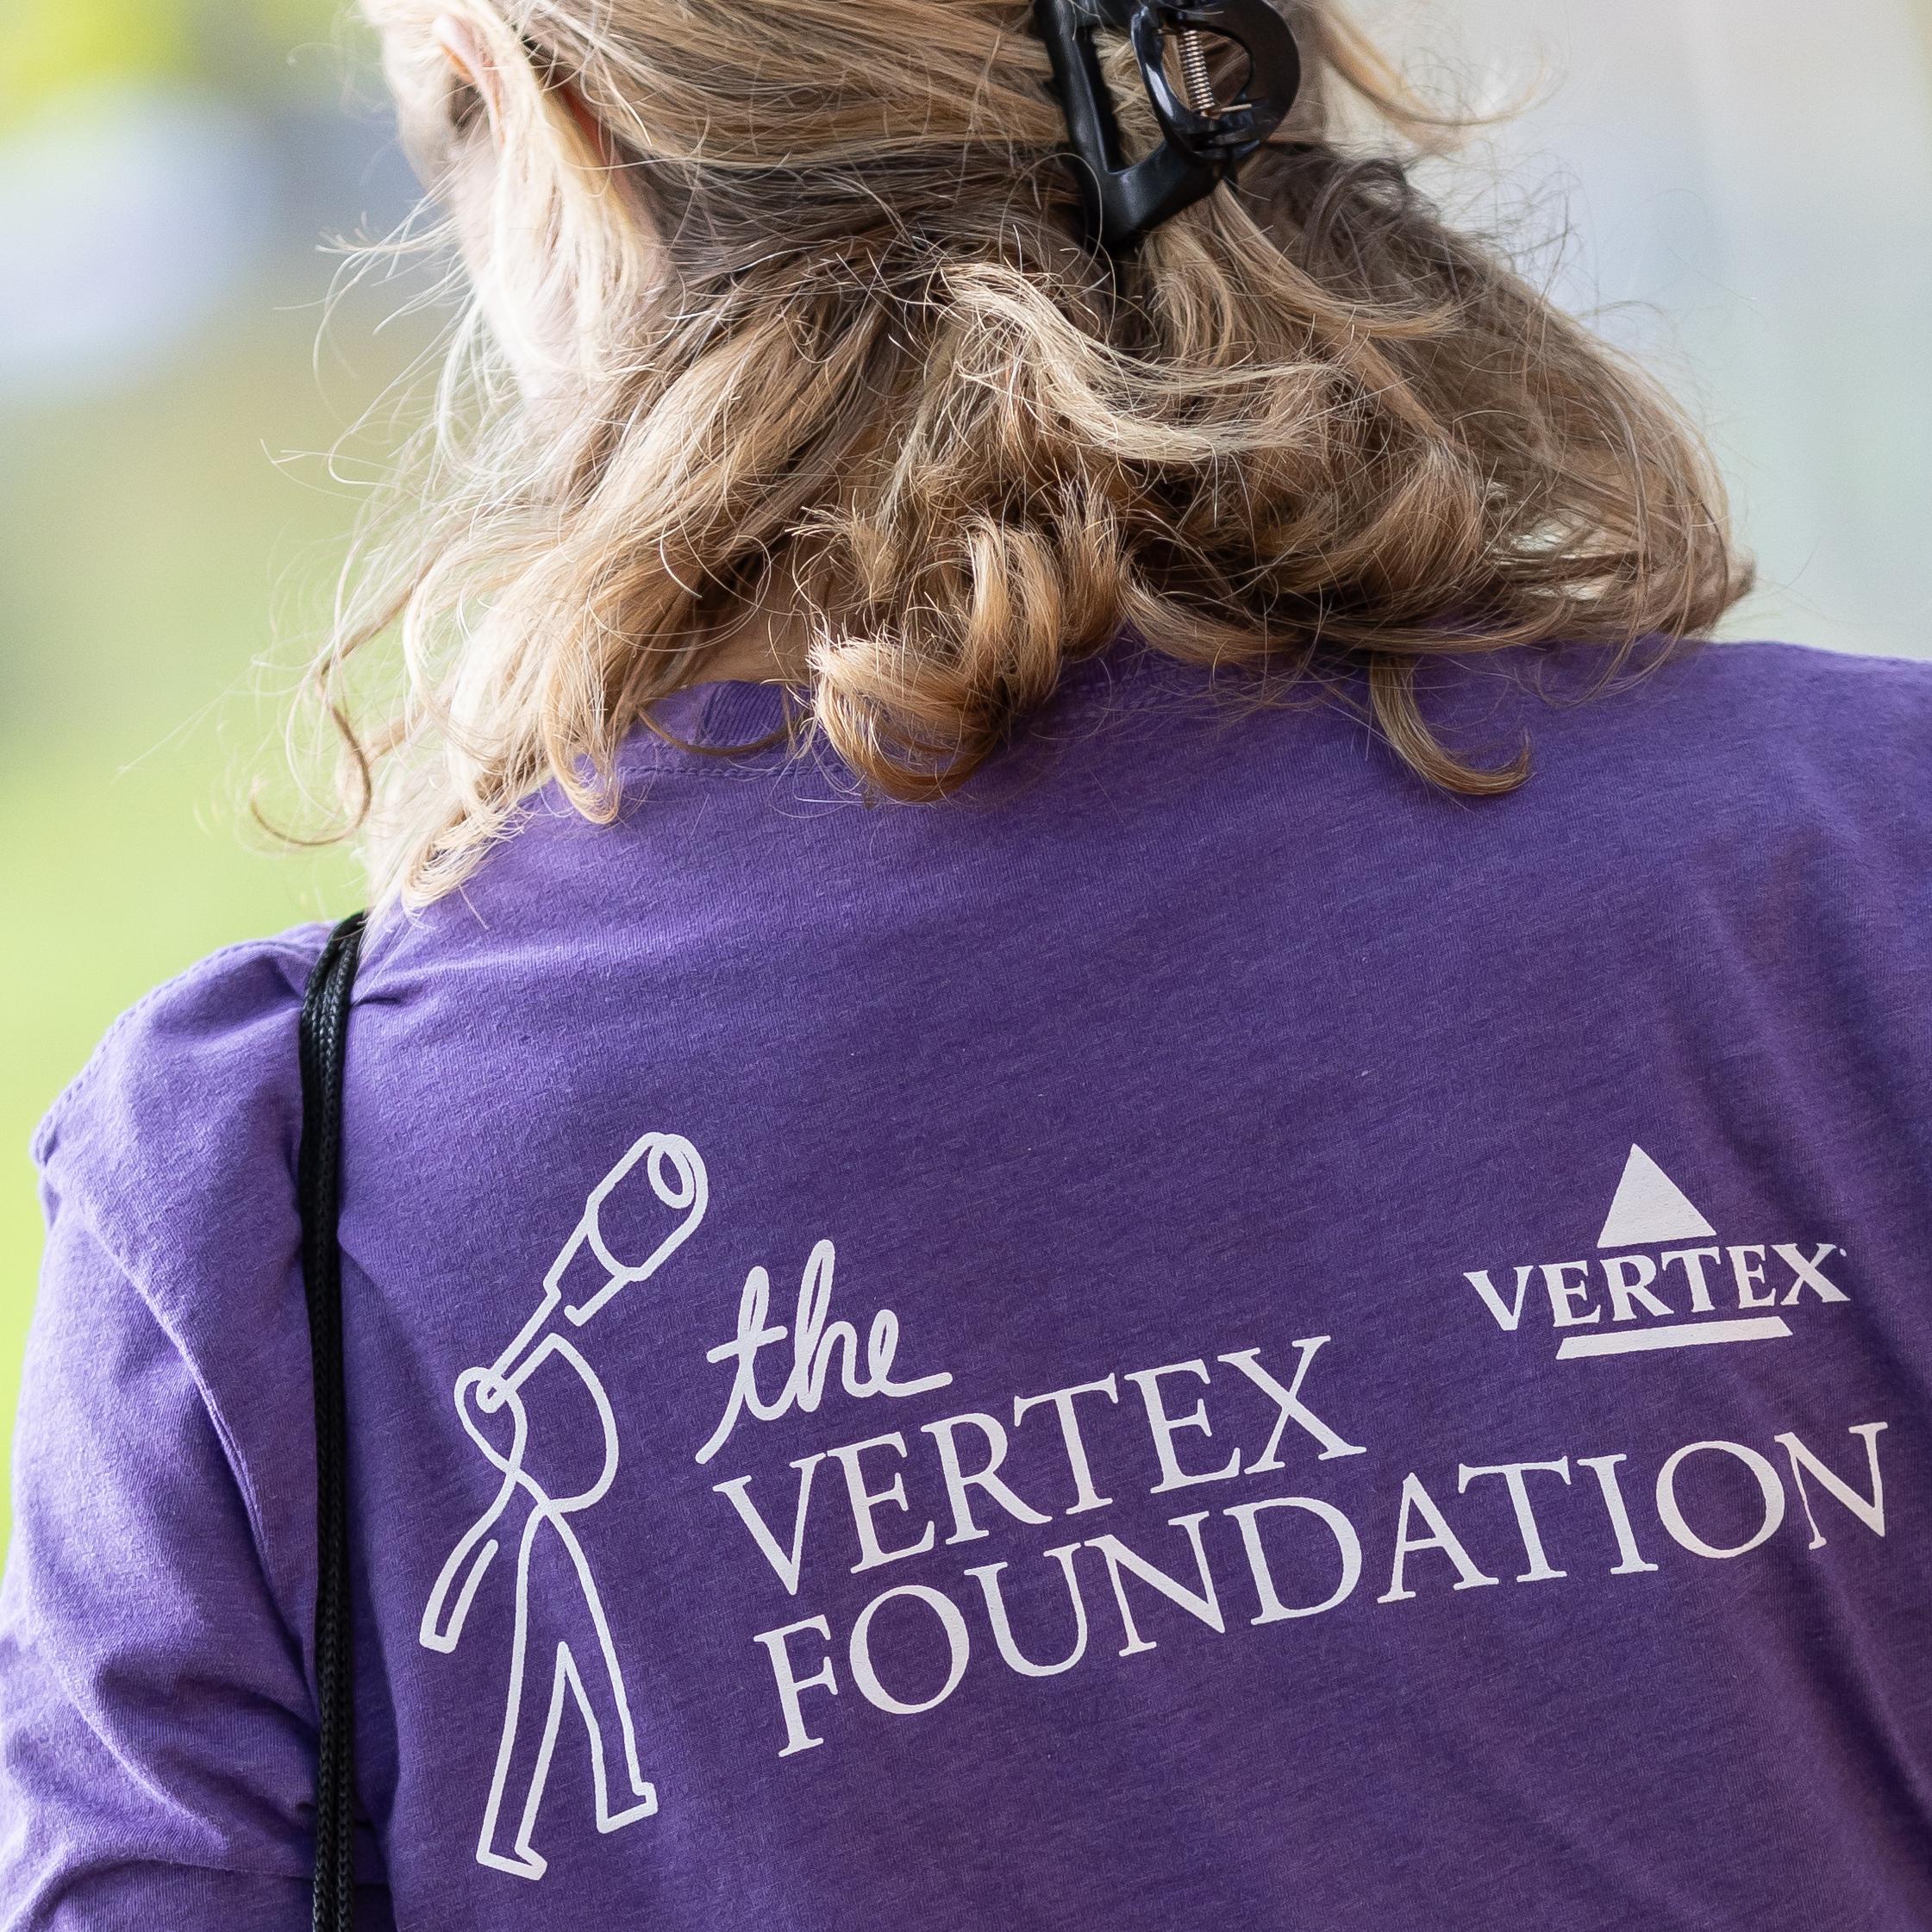 A Vertex employee wearing a purple shirt from the Vertex Foundation.